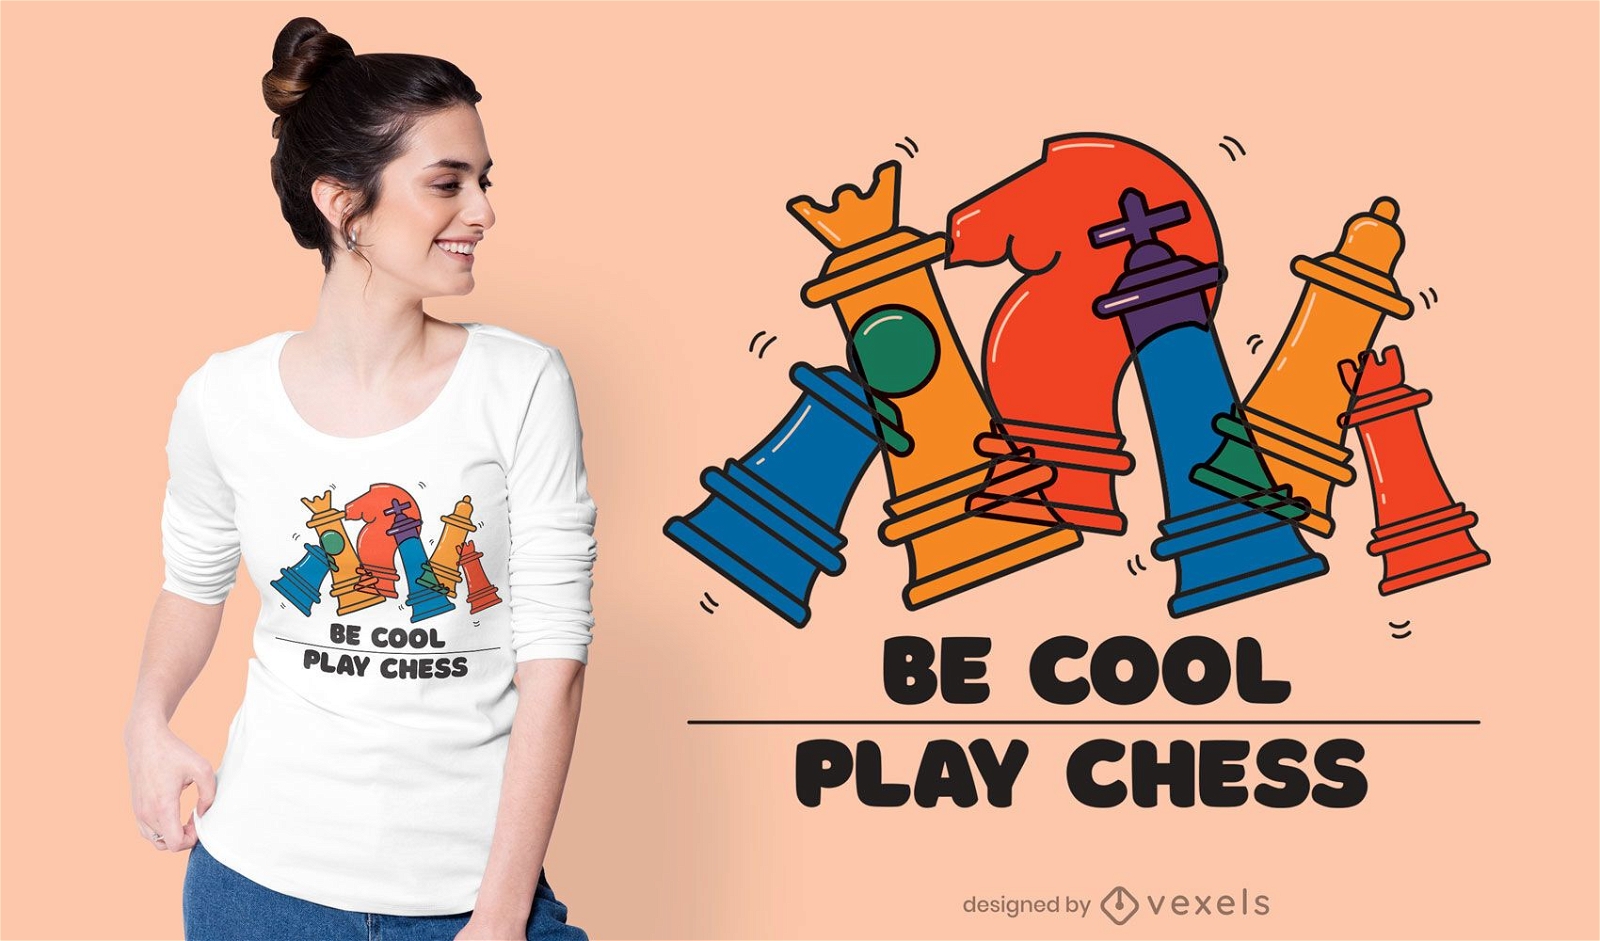 Be cool play chess t-shirt design